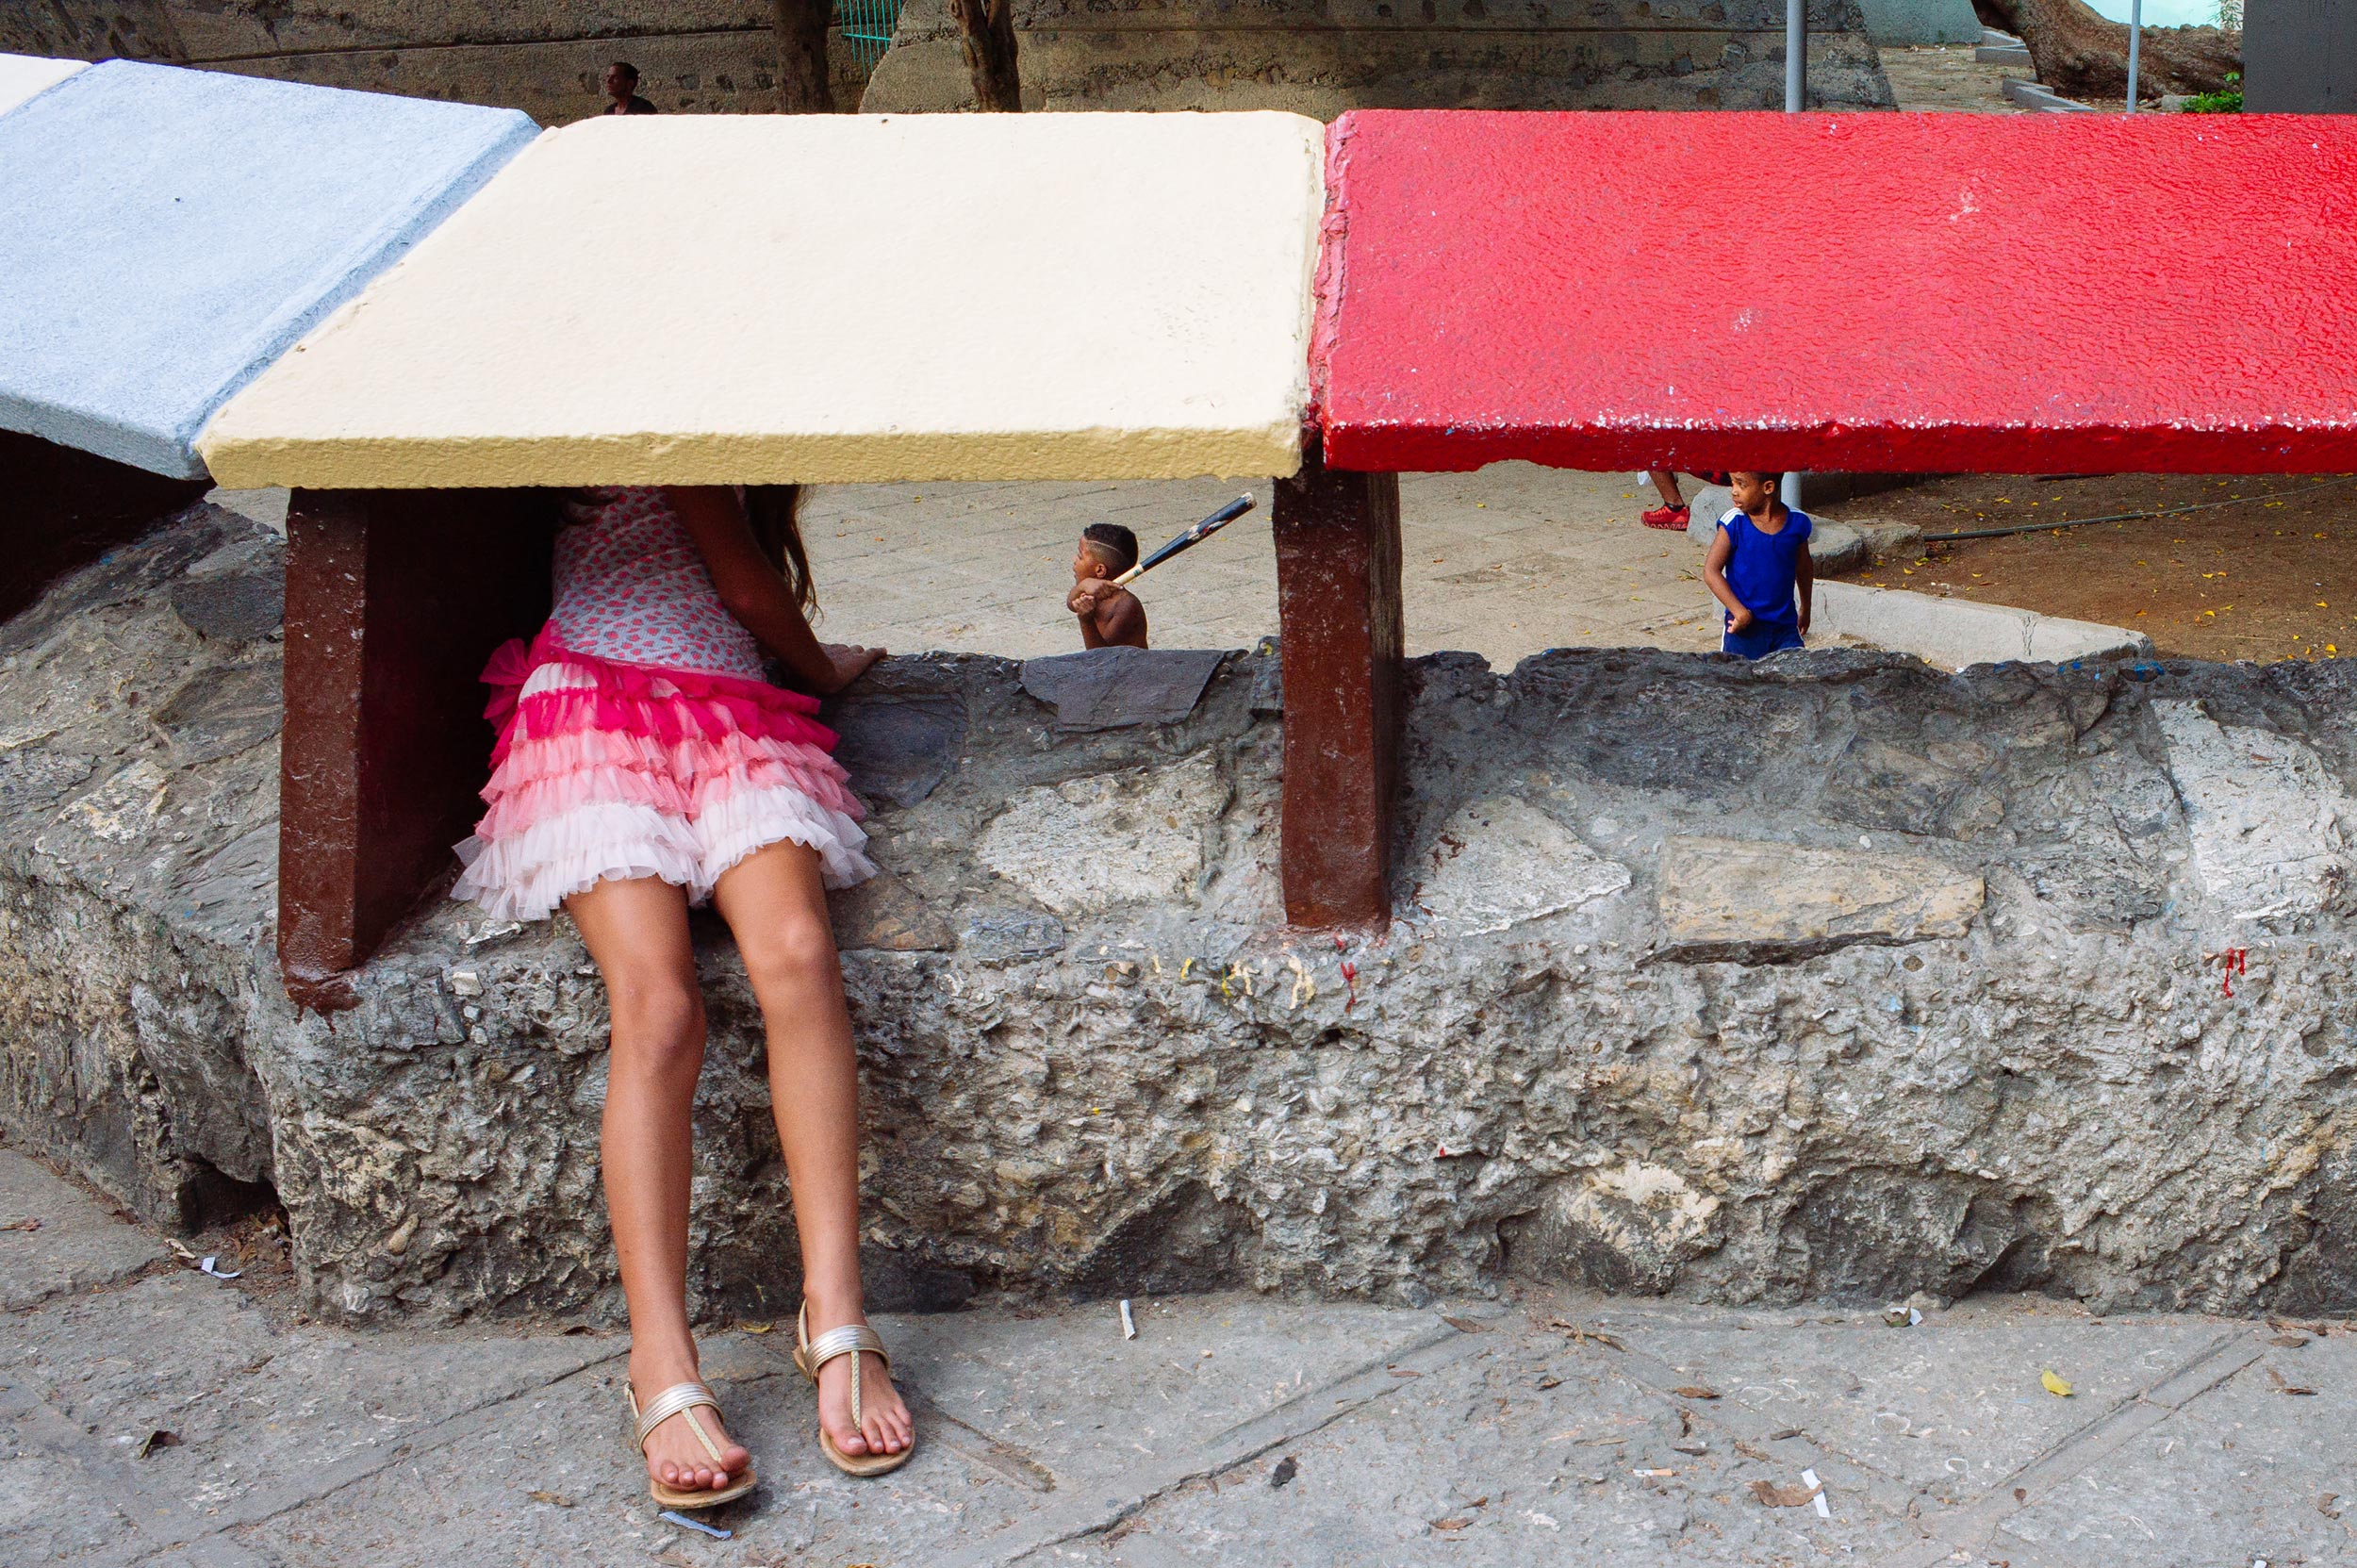 La-Habana-2016-girl-watches-kids-playing-baseball-in-a-courtyard-street-photography-by-Alessandro-Avenali.jpg